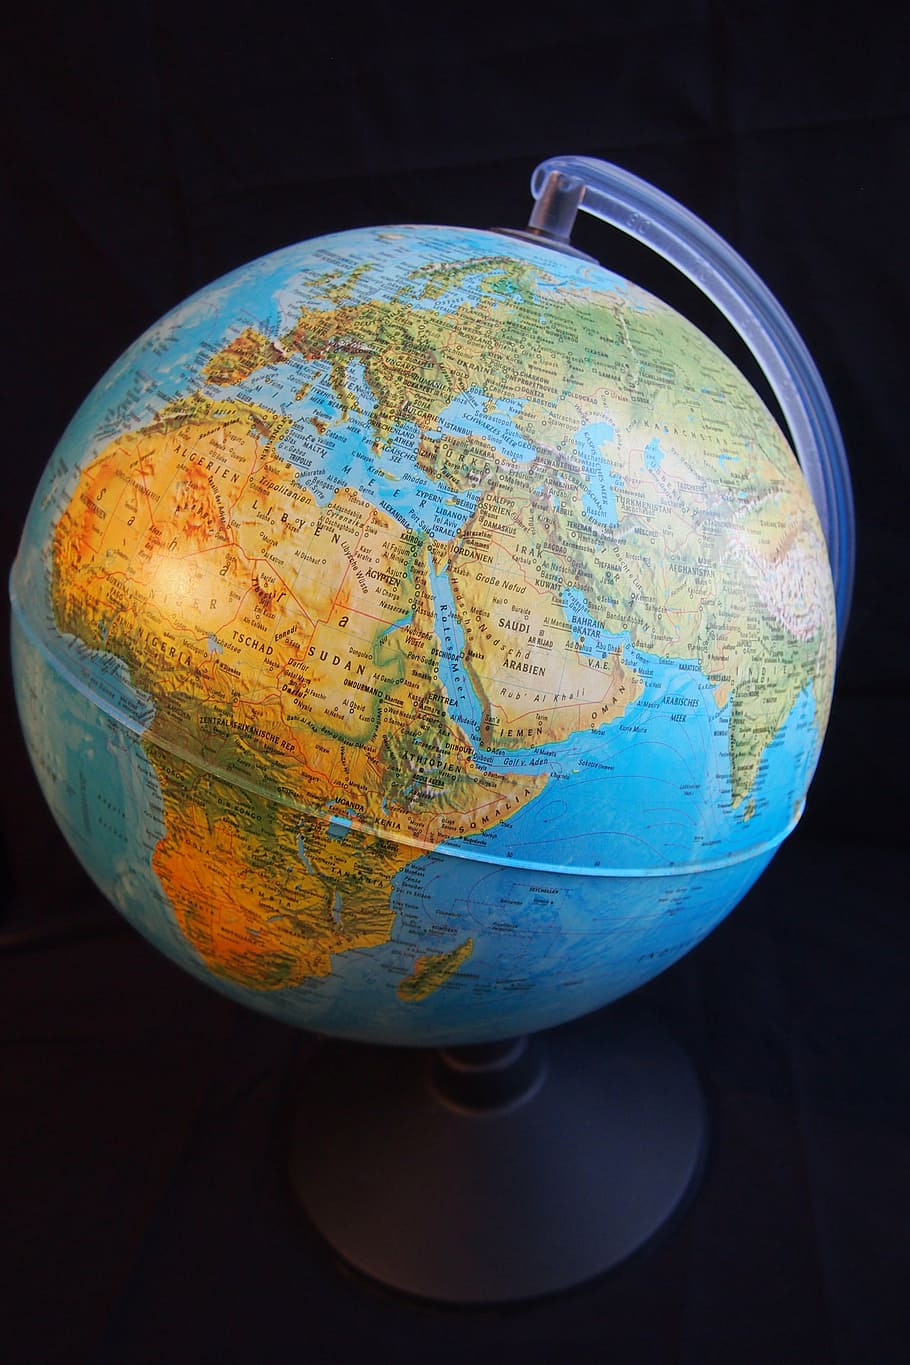 blue table globe, globe, hemisphere, africa, world, map of the world, globe - Man Made Object, planet - Space, sphere, earth